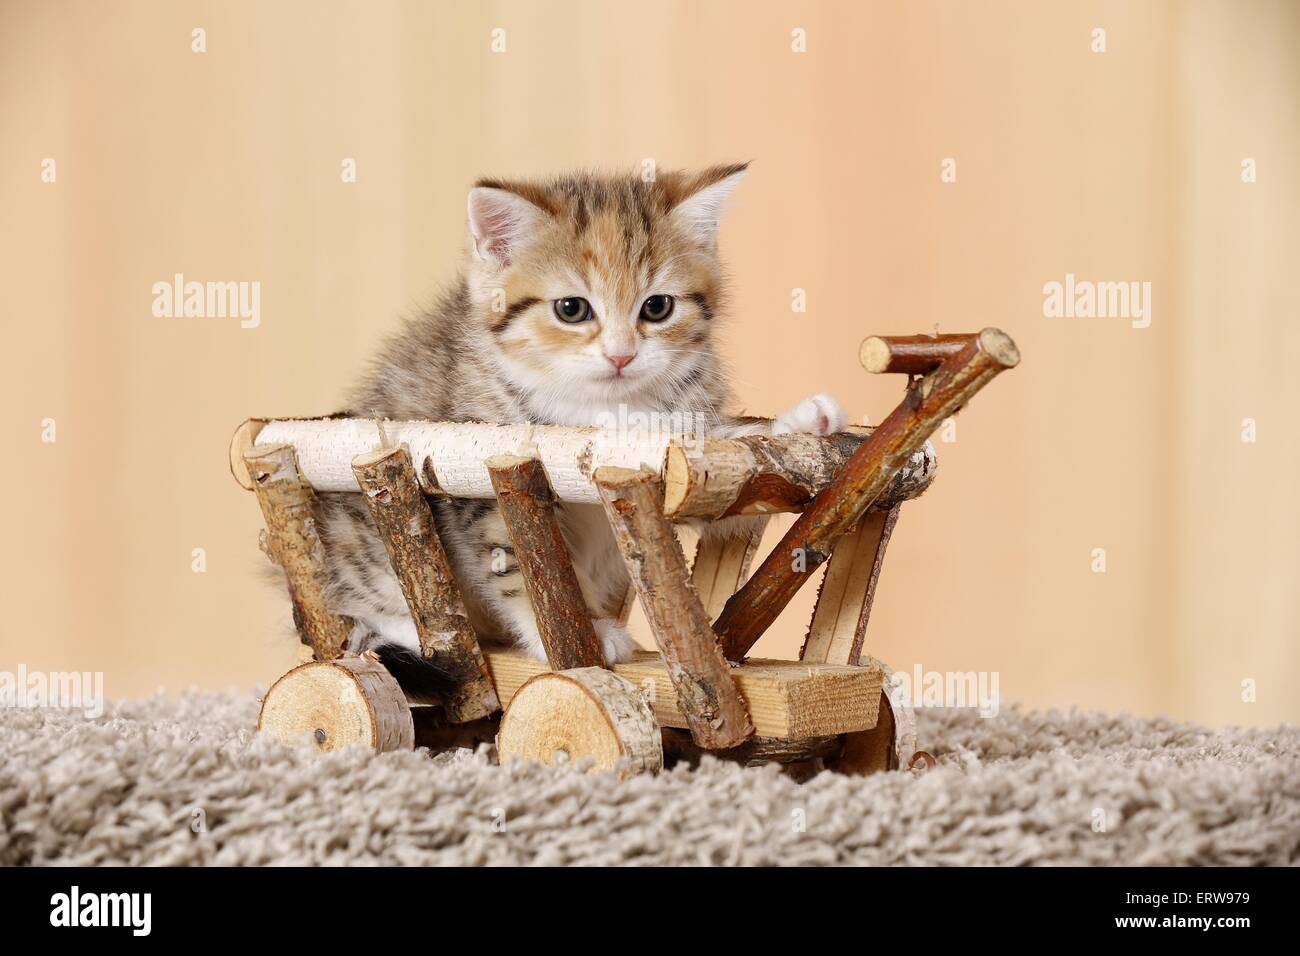 Egyptian-Mau-crossbreed kitten Stock Photo